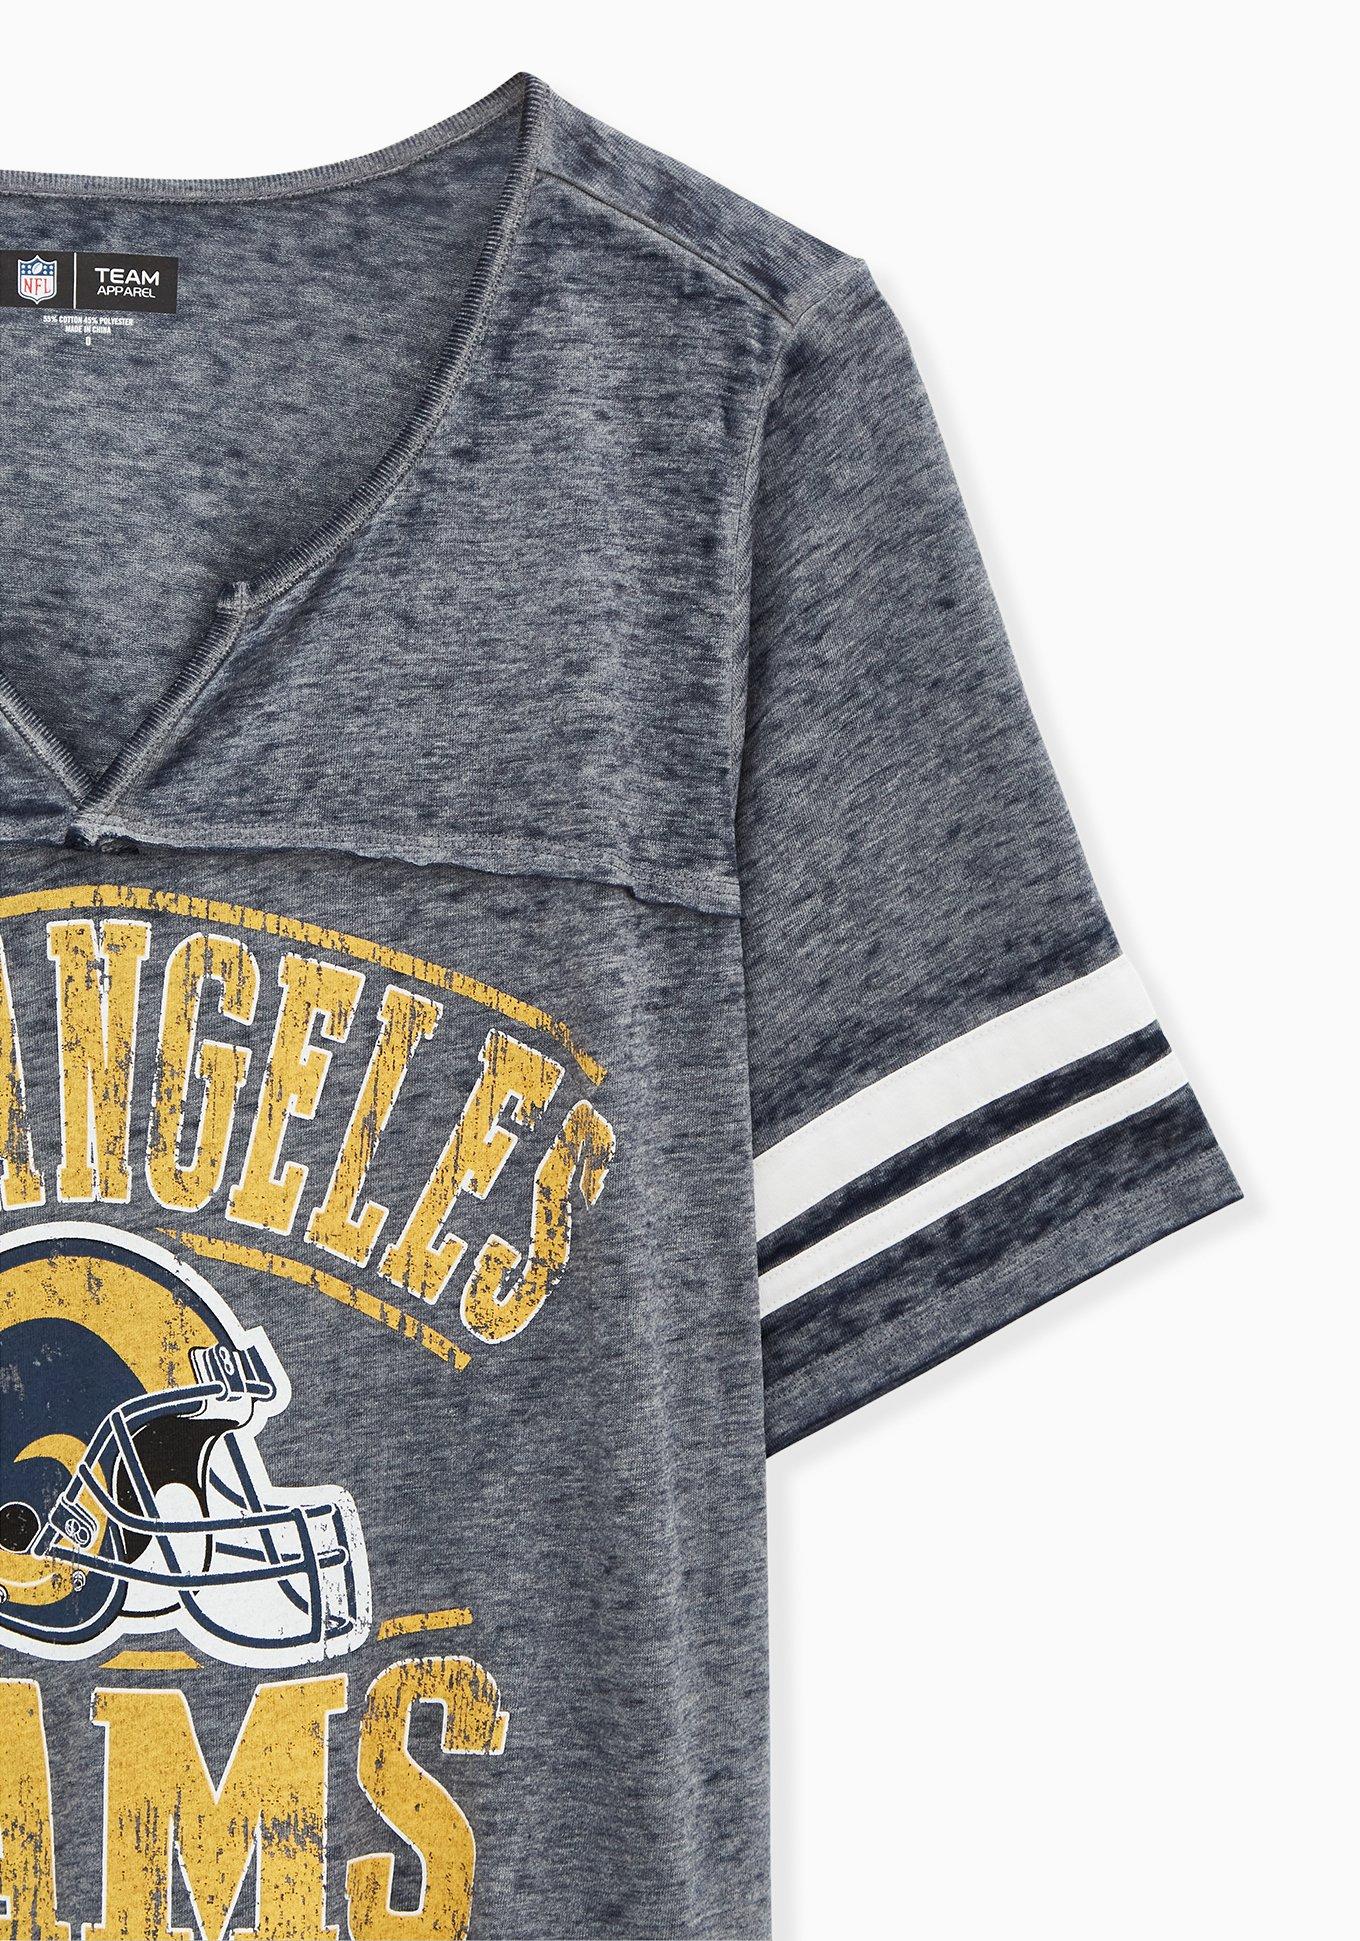 Los Angeles Vintage Wash Tee Football Shirt LA Rams American